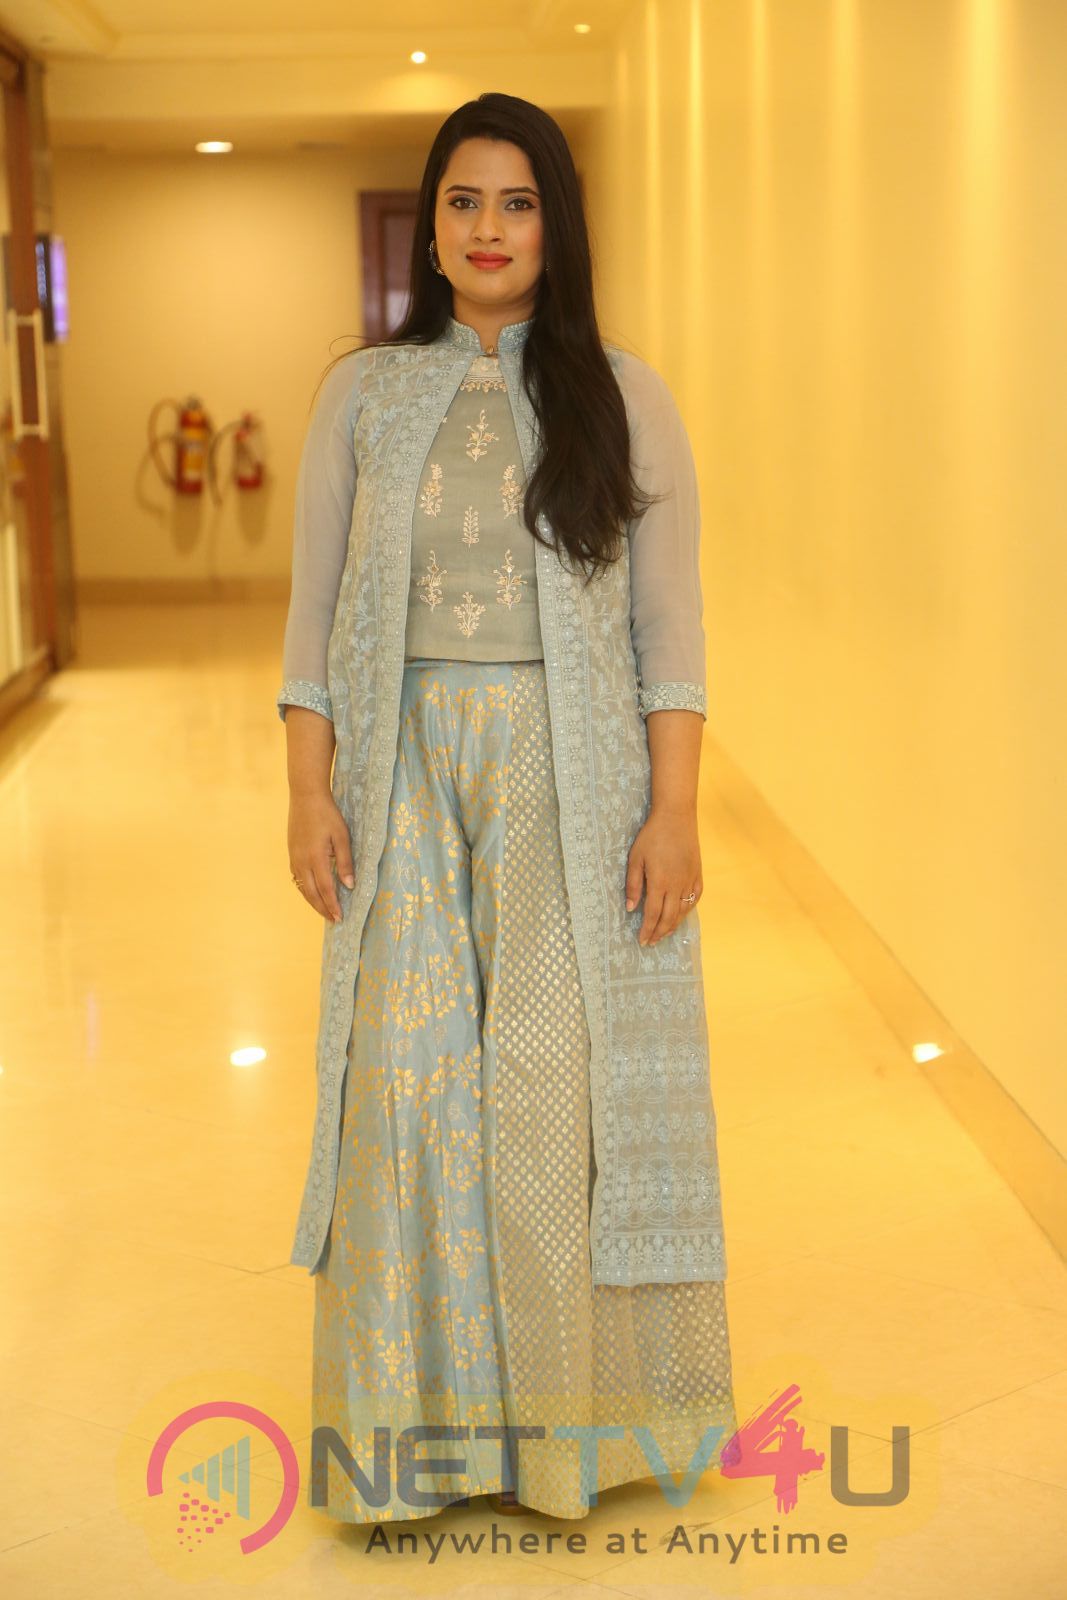 Actress Srividya Cute Photos Telugu Gallery